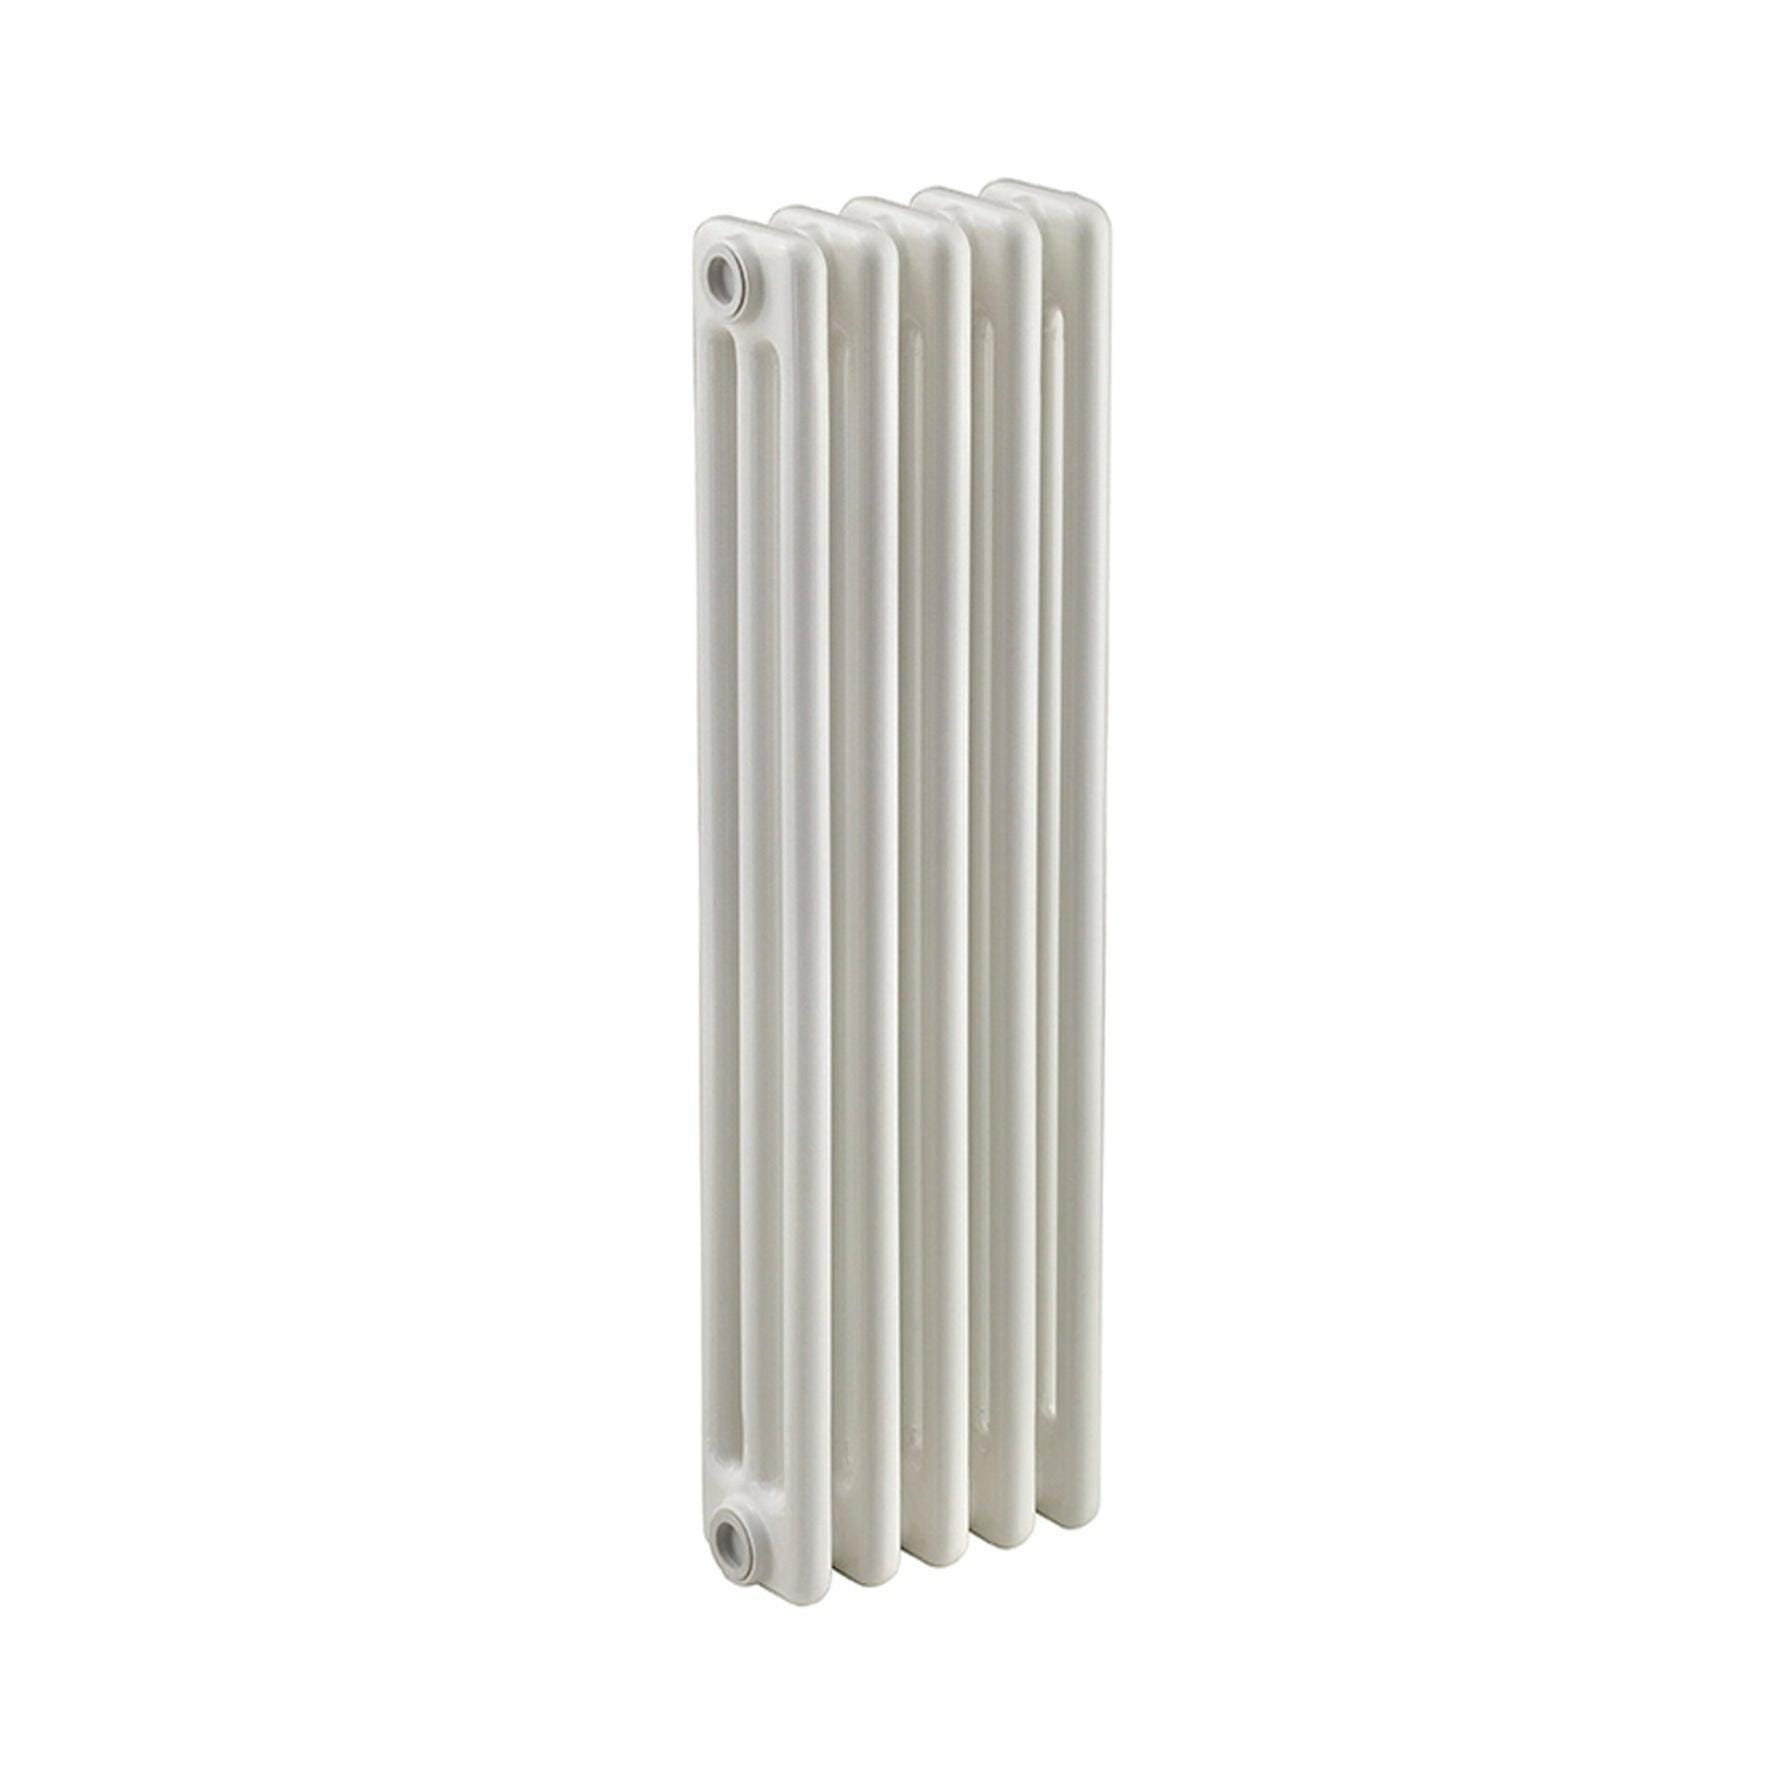 Radiatore acqua calda EQUATION Tubolare in acciaio 3 colonne, 5 elementi  interasse 68.5 cm, bianco